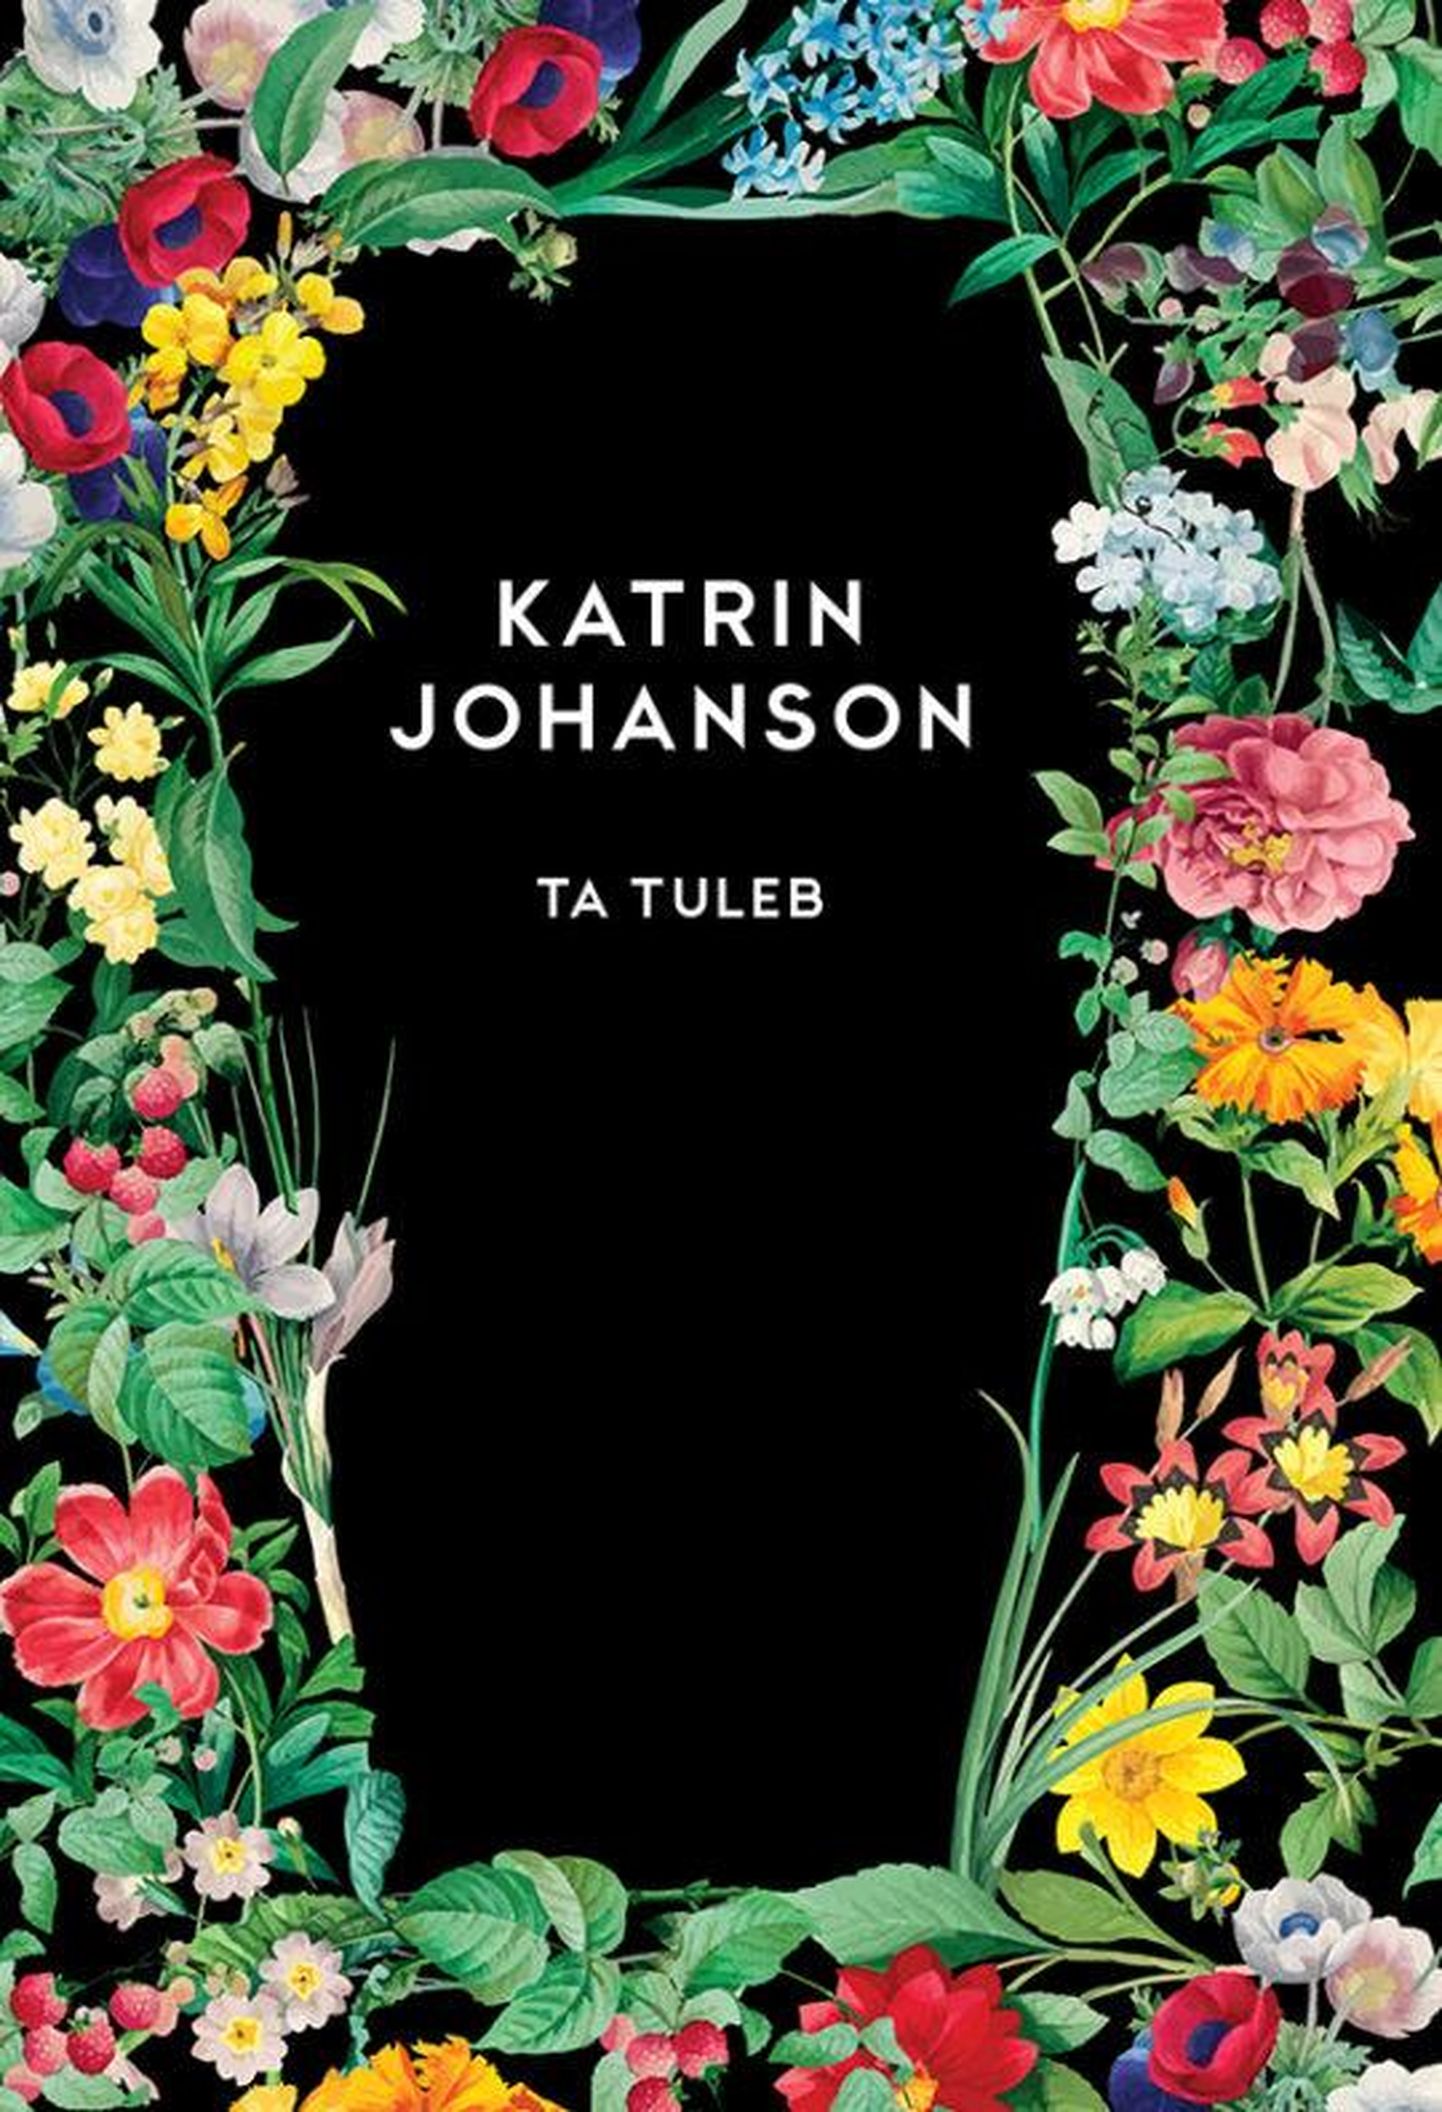 Katrin Johanson, «Ta tuleb».